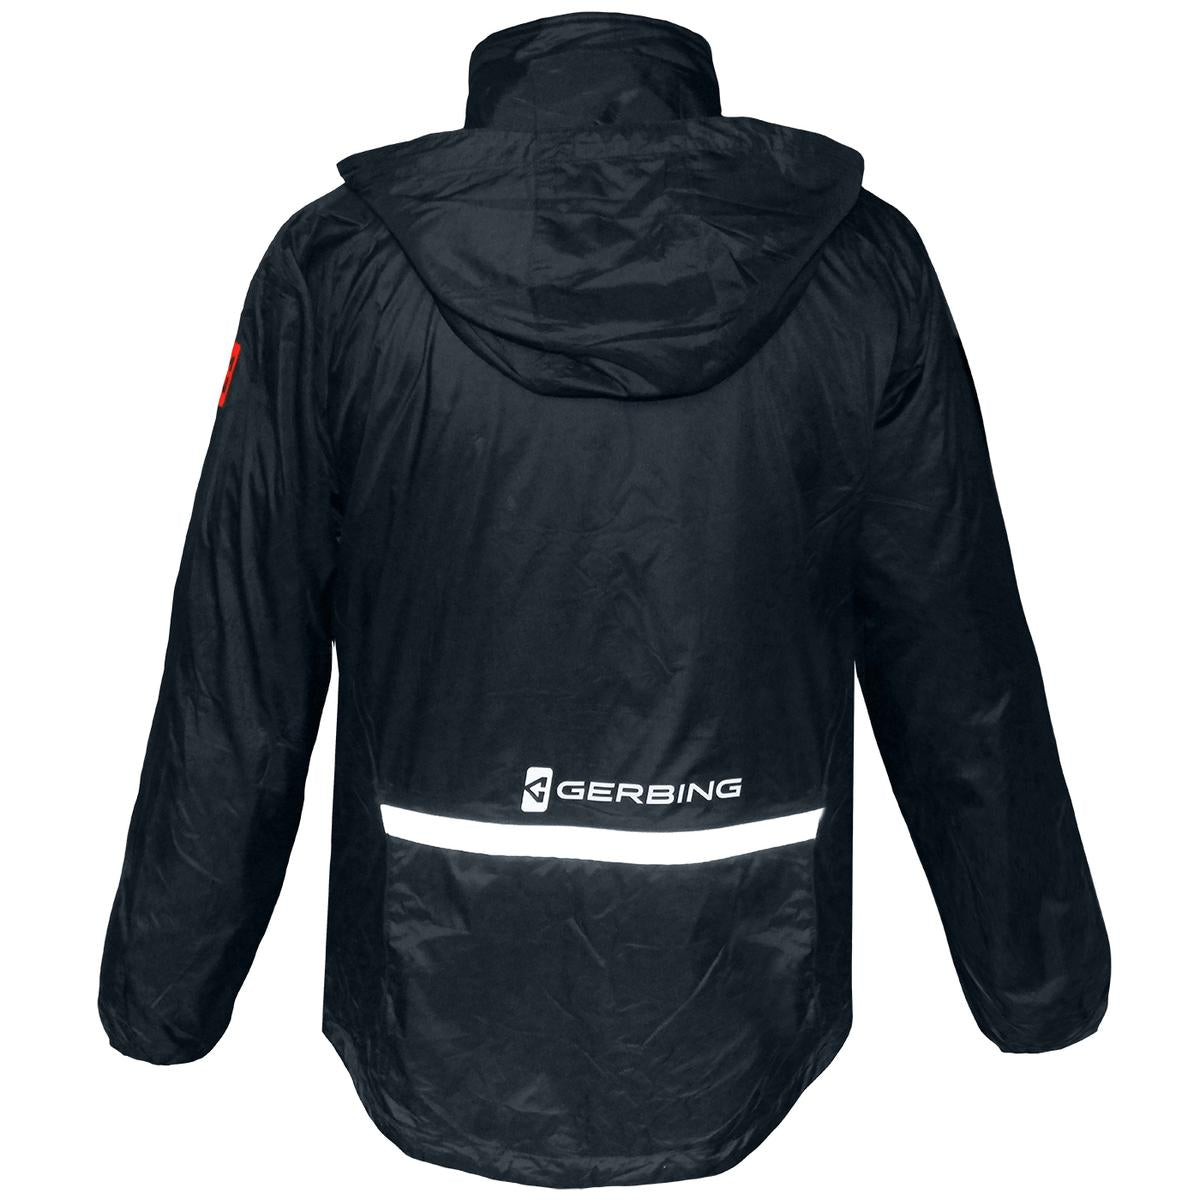 Gerbing 12V Heated Jacket Liner 2.0 – Gerbing Heated Clothing